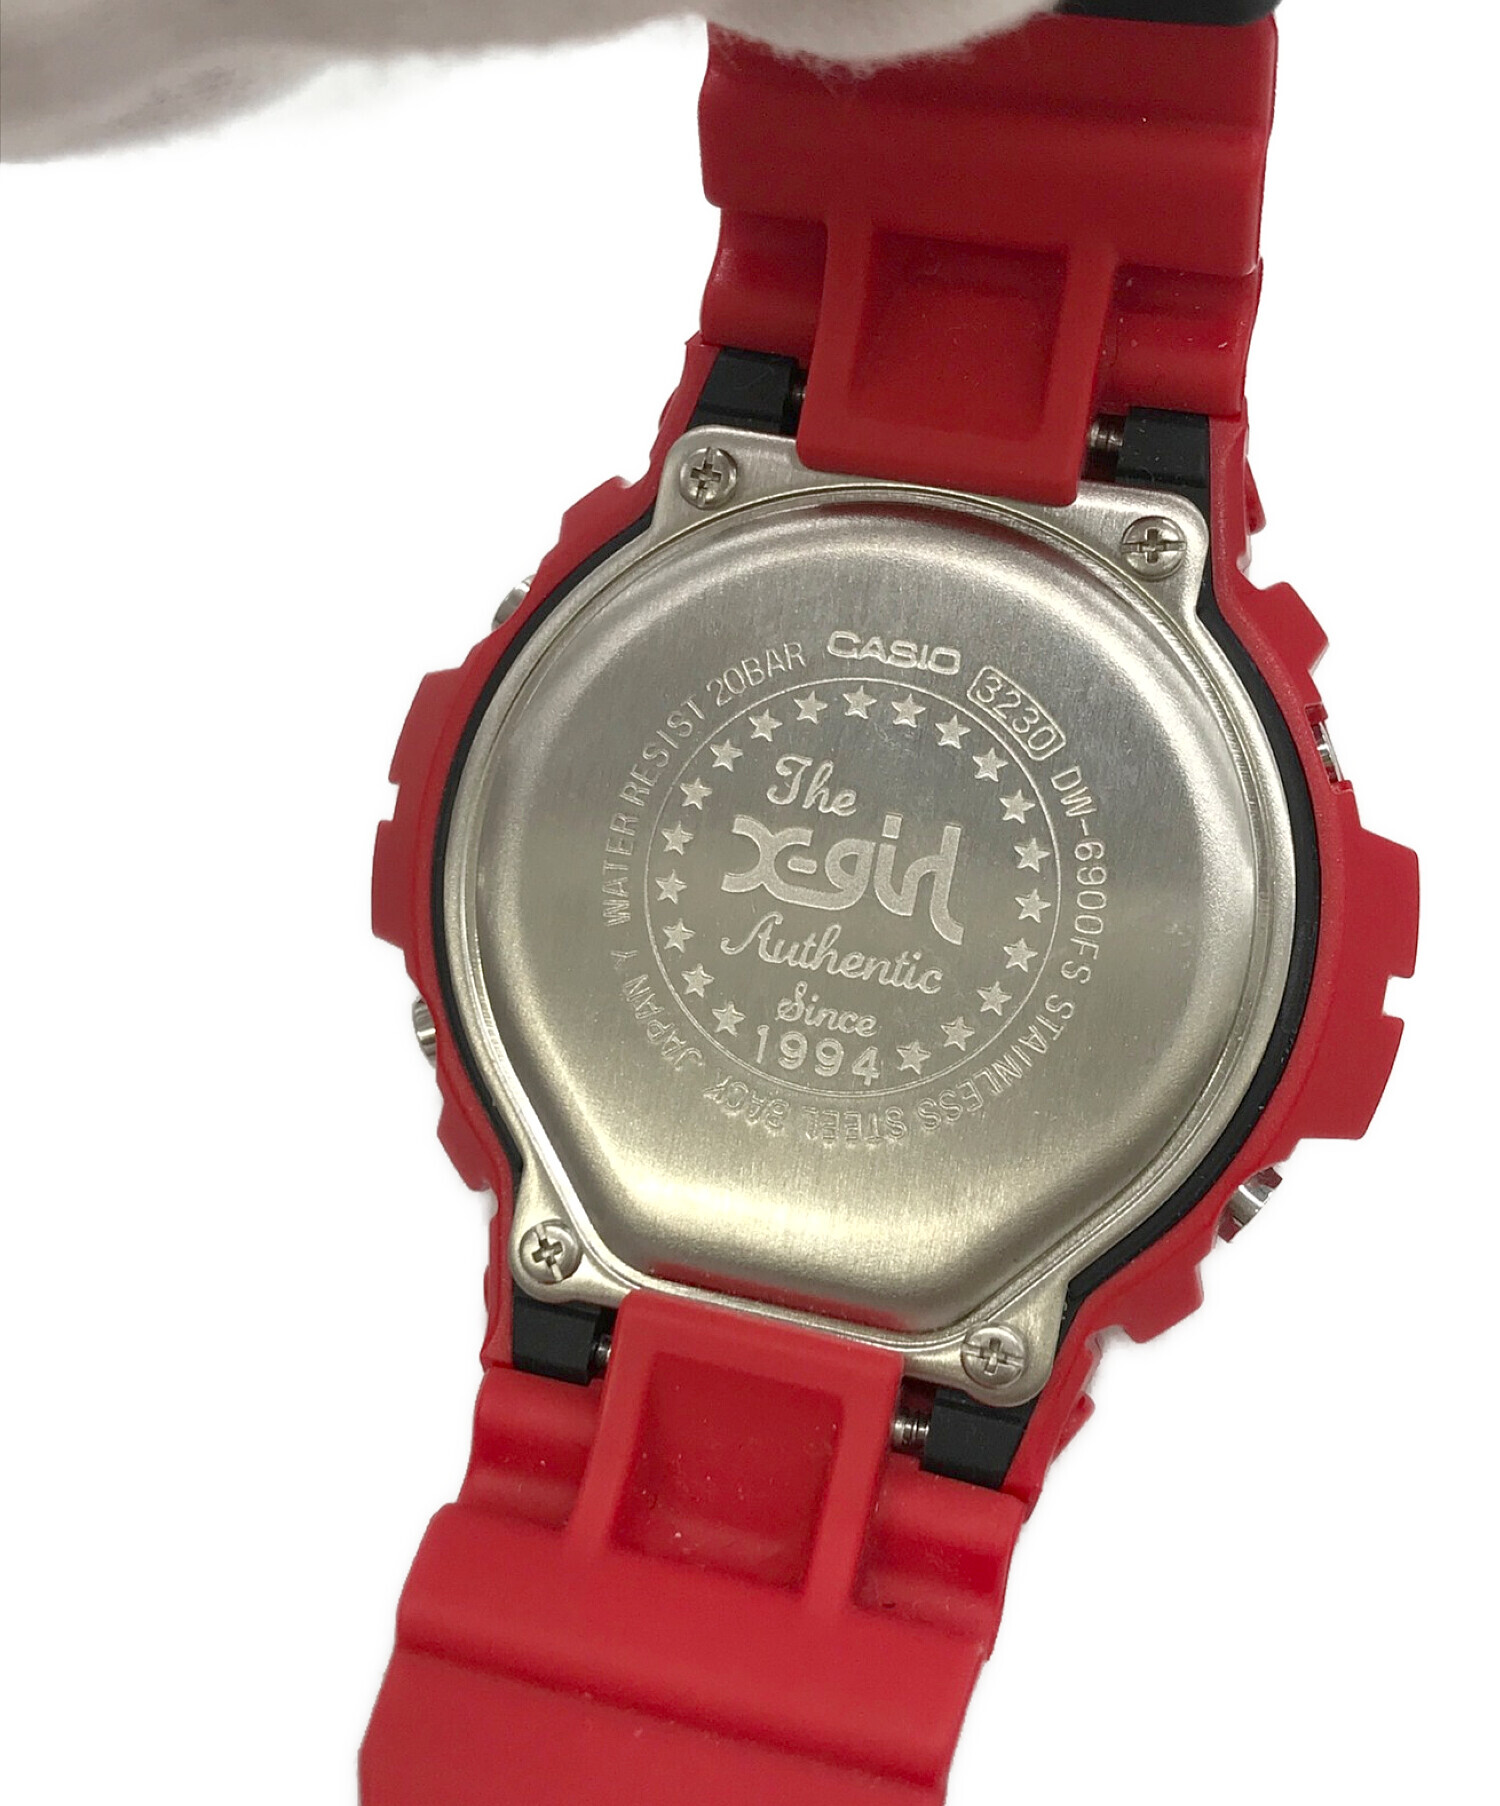 CASIO (カシオ) X-girl (エックスガール) 腕時計 レッド